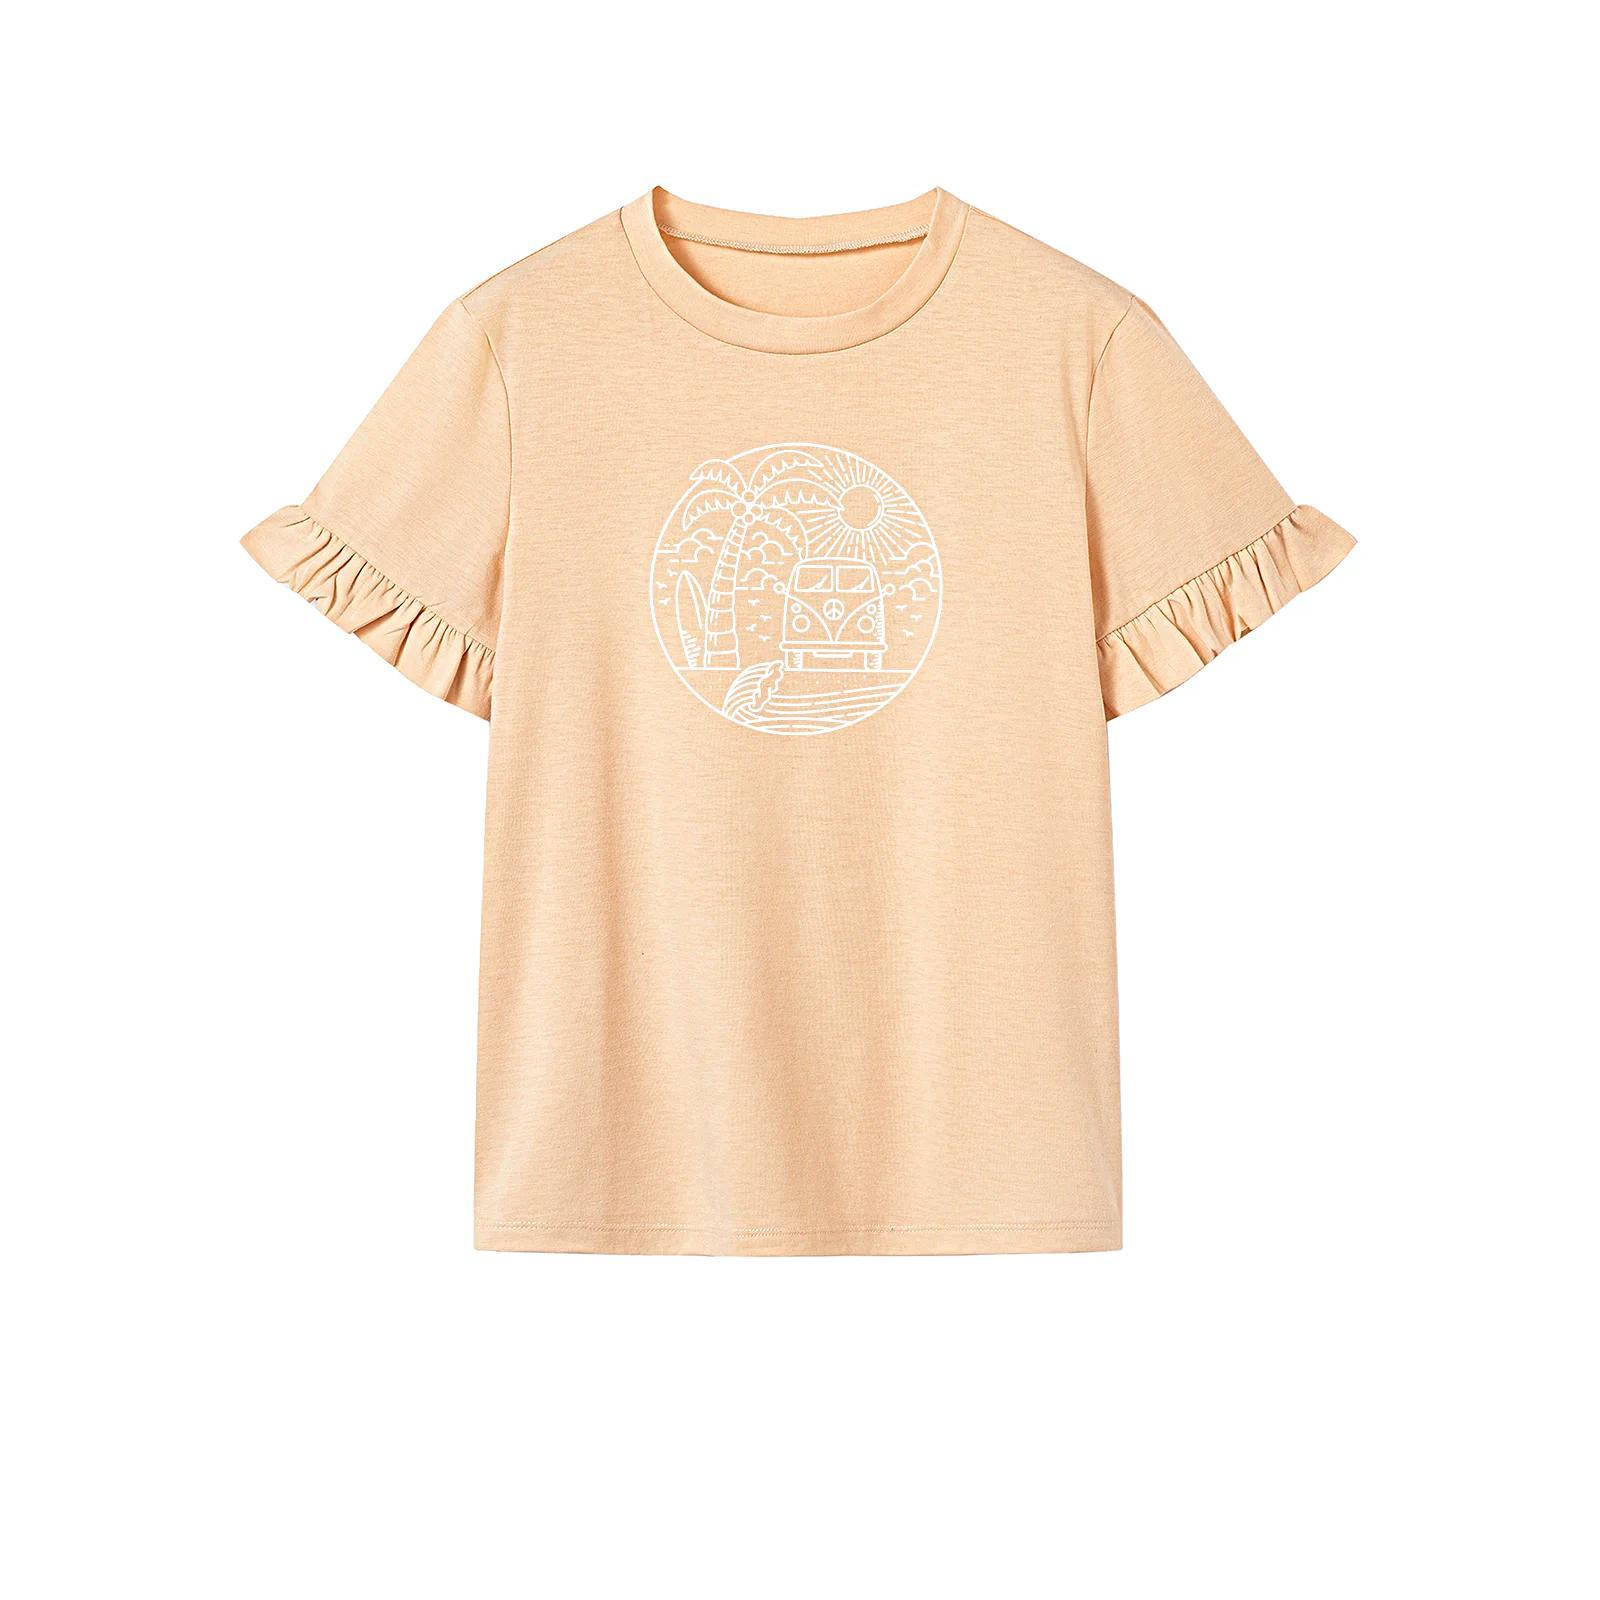 T Shirt for Women Summer Fashion Soft Crewneck Shirt for Camping Trip Street L